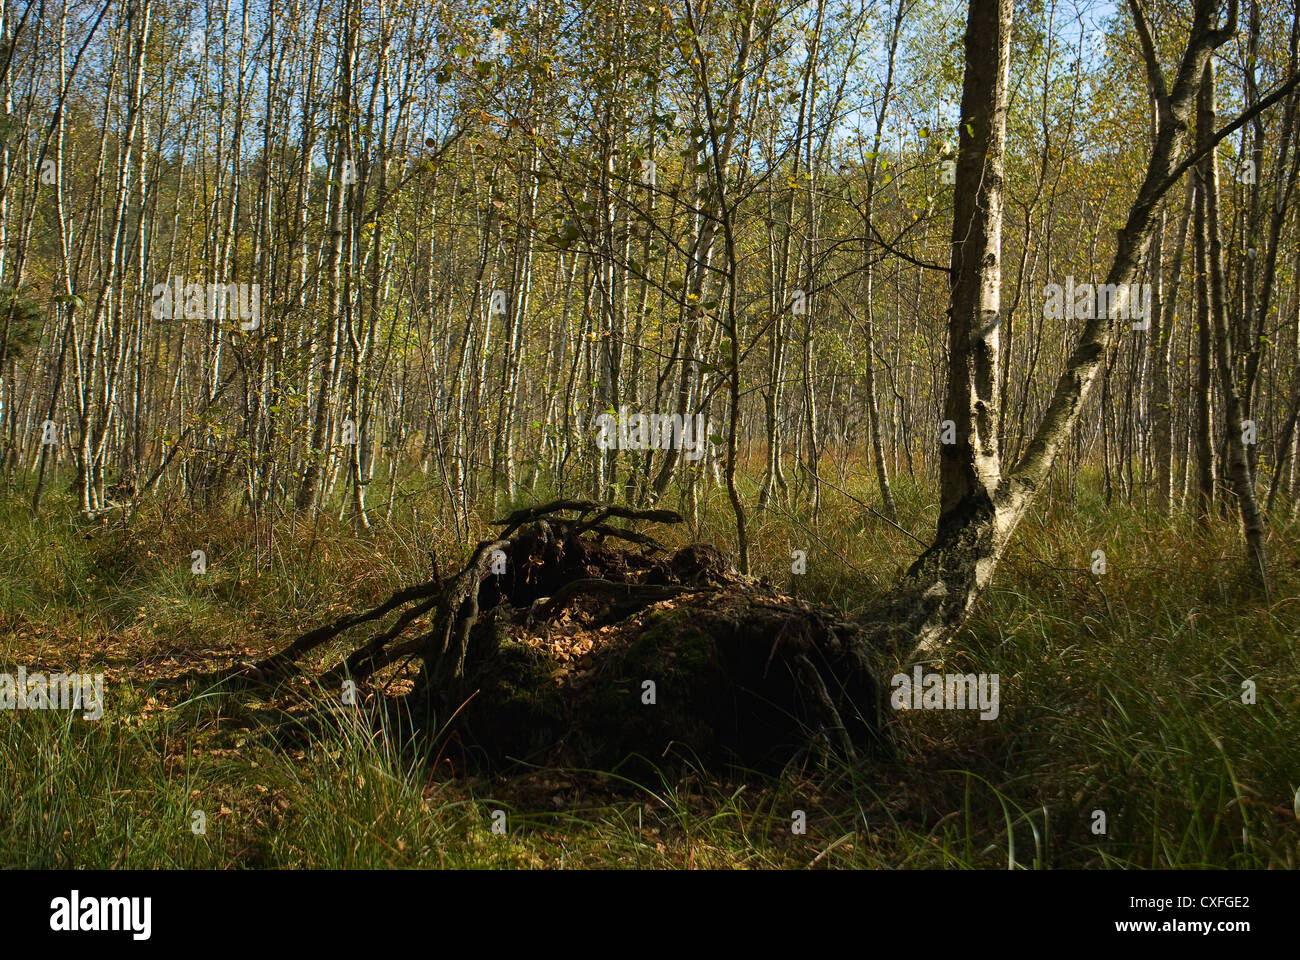 swamp birch forest Stock Photo